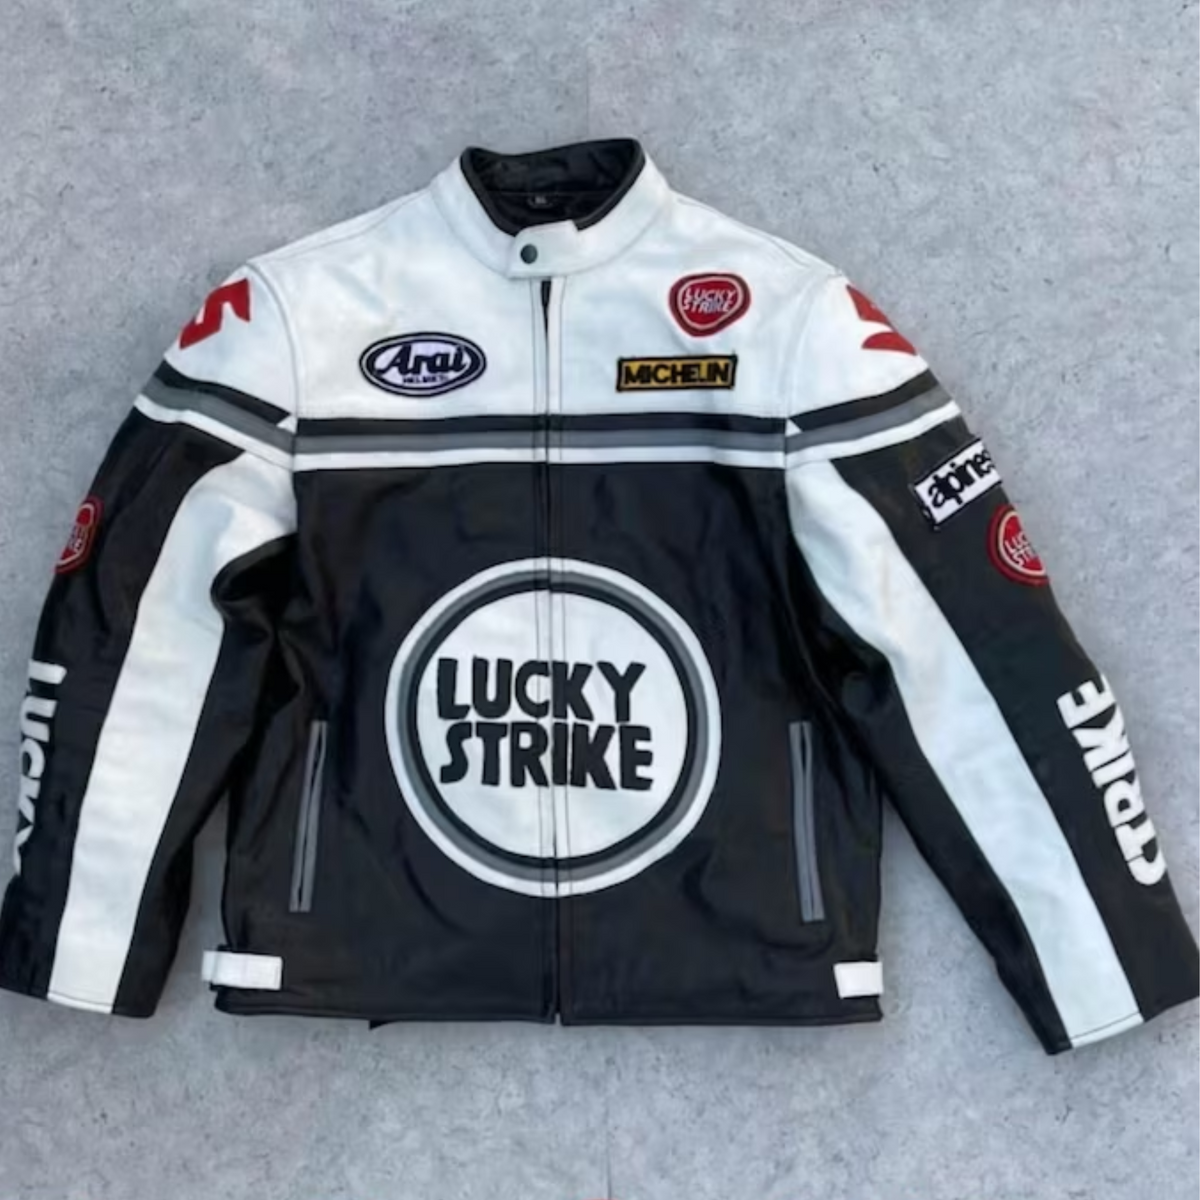 Lucky Strike Lederjacke für Herren, Motorrad-Lederjacke für Herrenbekleidung, handgefertigte Vintage-Jacke aus echtem Leder, Geschenk für Herren, Biker, Racing, echtes Leder-Herrenjacke